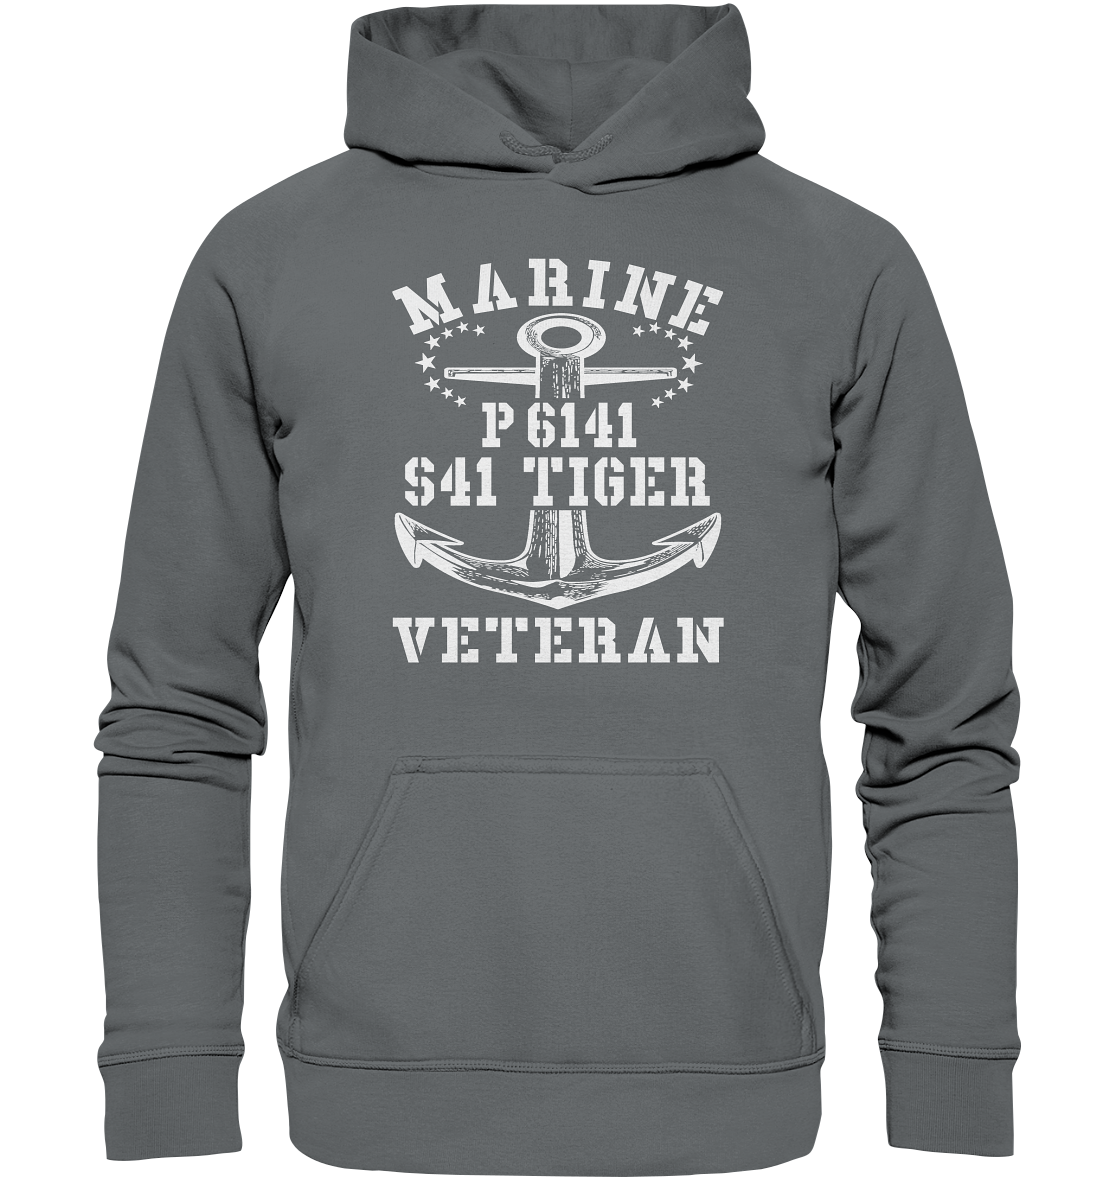 P6141 S41 TIGER Marine Veteran - Basic Unisex Hoodie